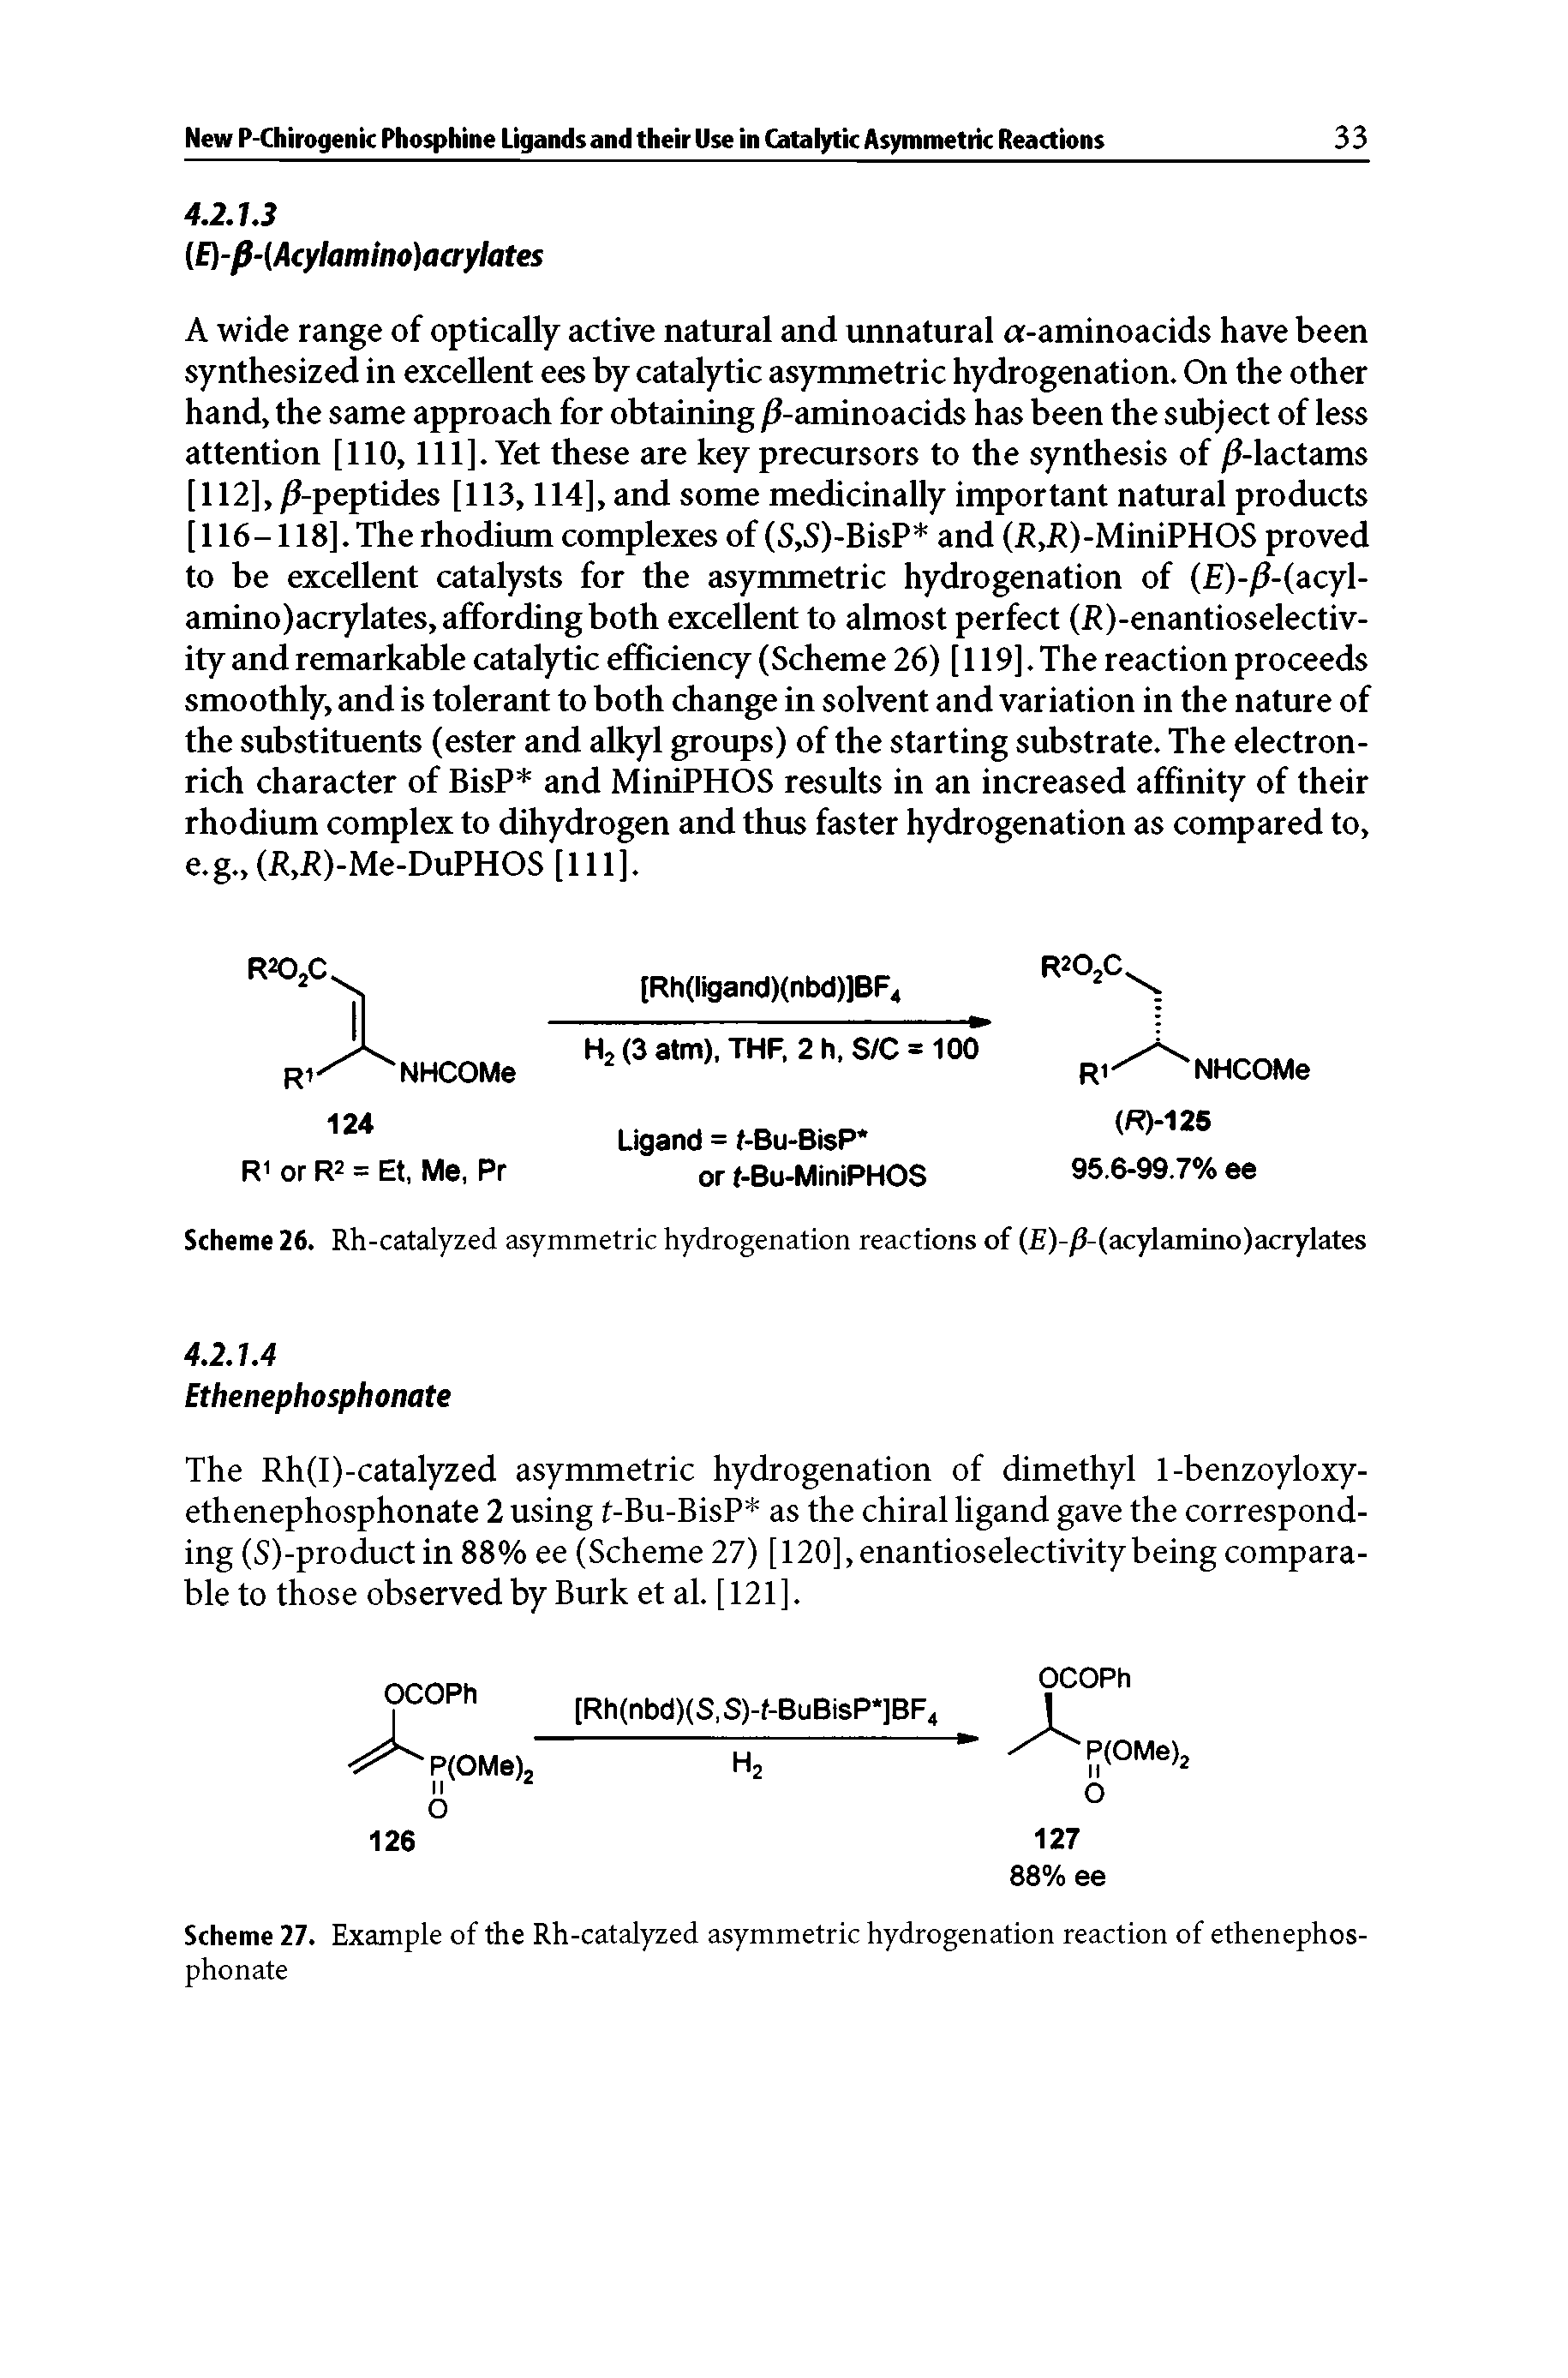 Scheme 27. Example of the Rh-catalyzed asymmetric hydrogenation reaction of ethenephosphonate...